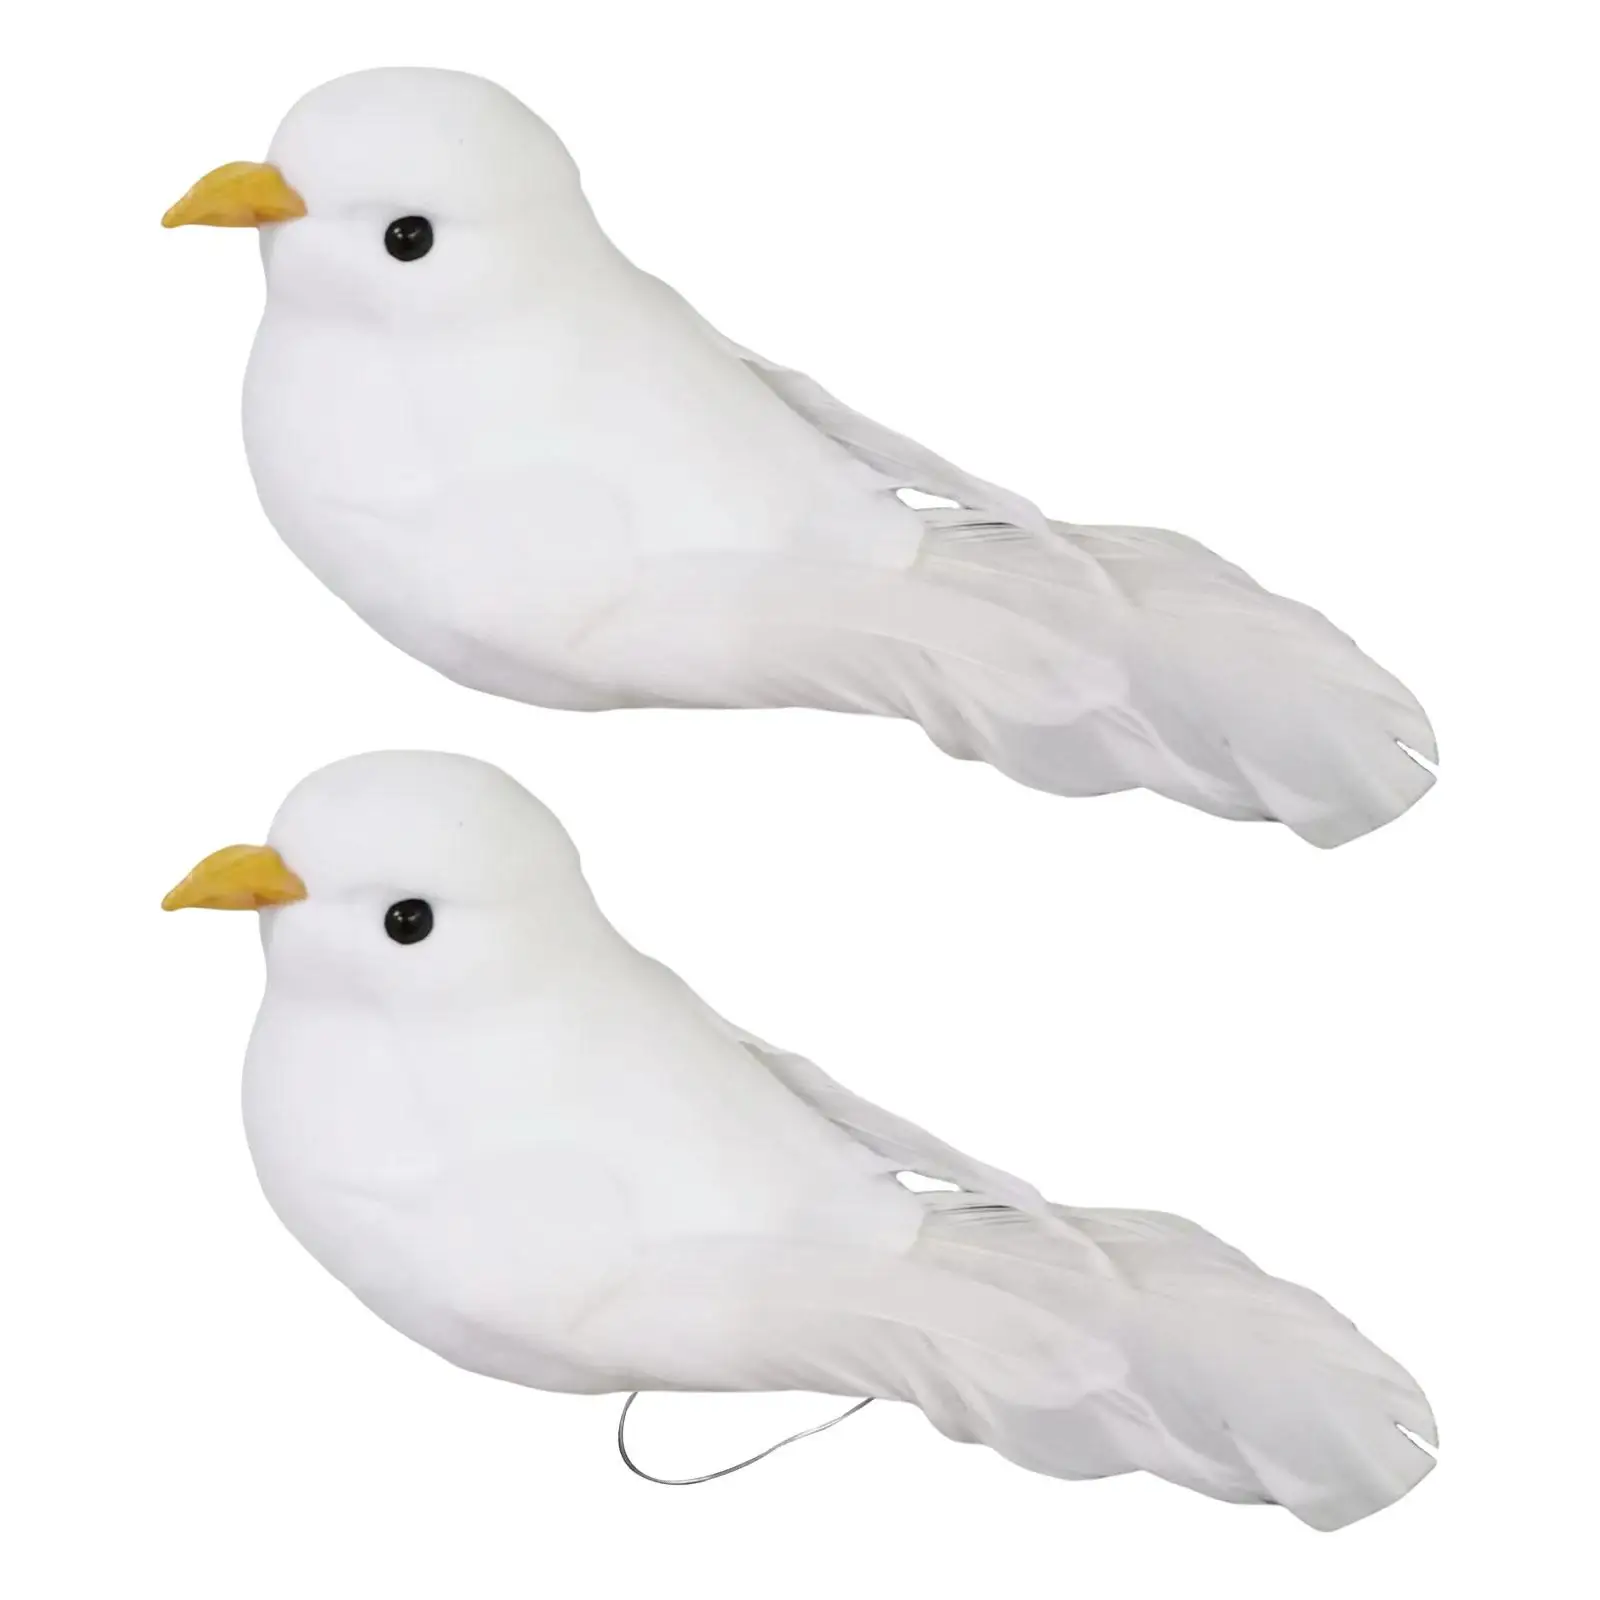 

Artificial Feathered Birds Embellishing DIY Crafts Decorative White Simulation Foam Birds for Garden Easter Wedding Decoration